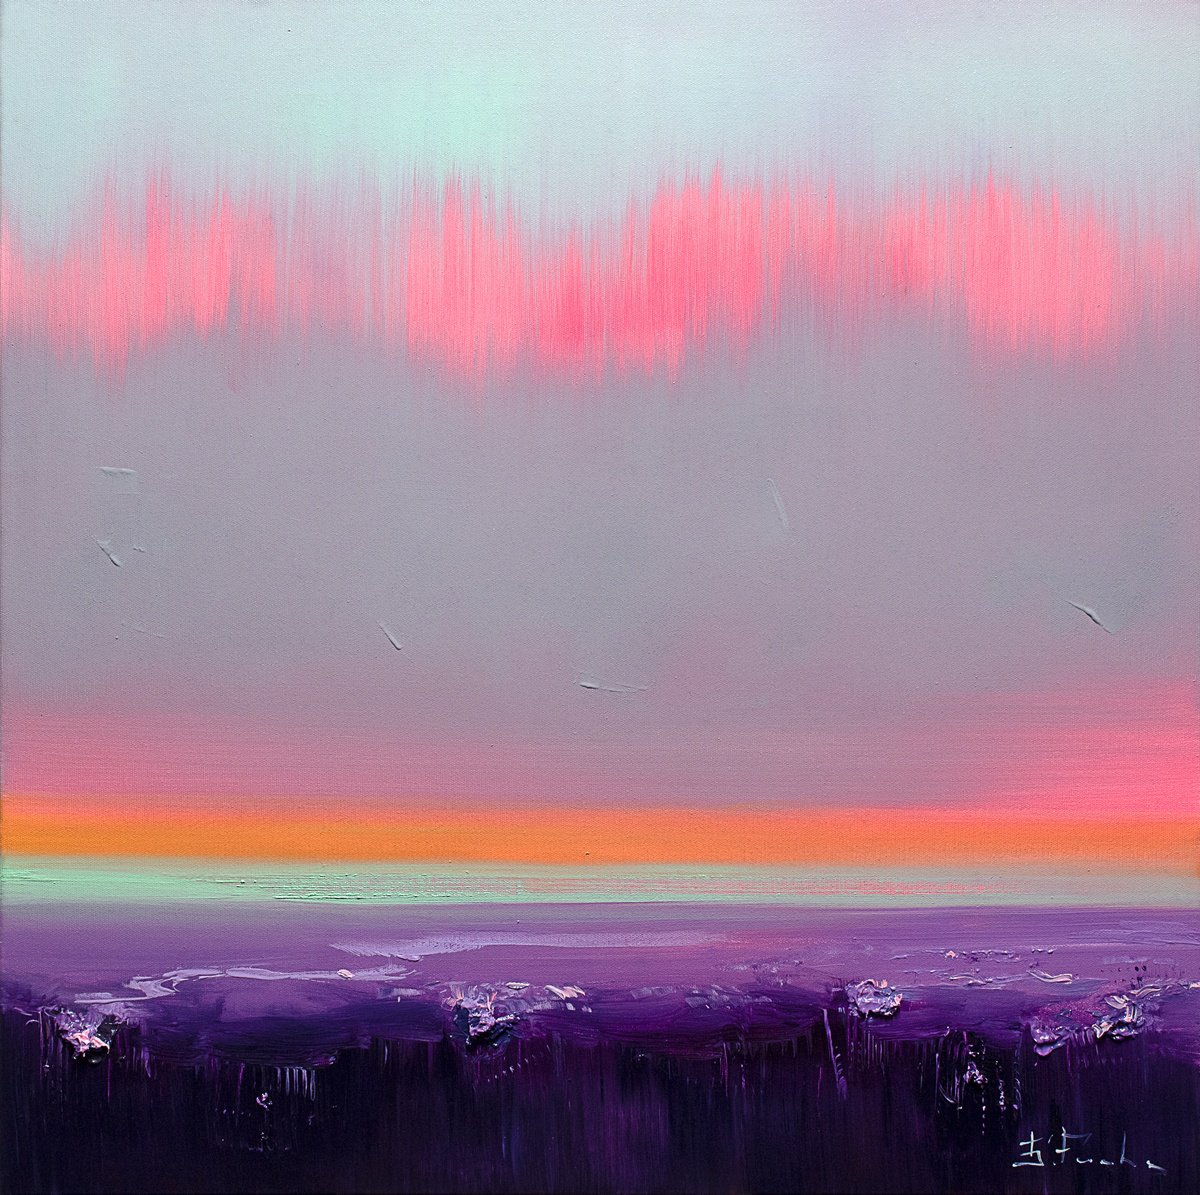 The Lavender Field by Bozhena Fuchs